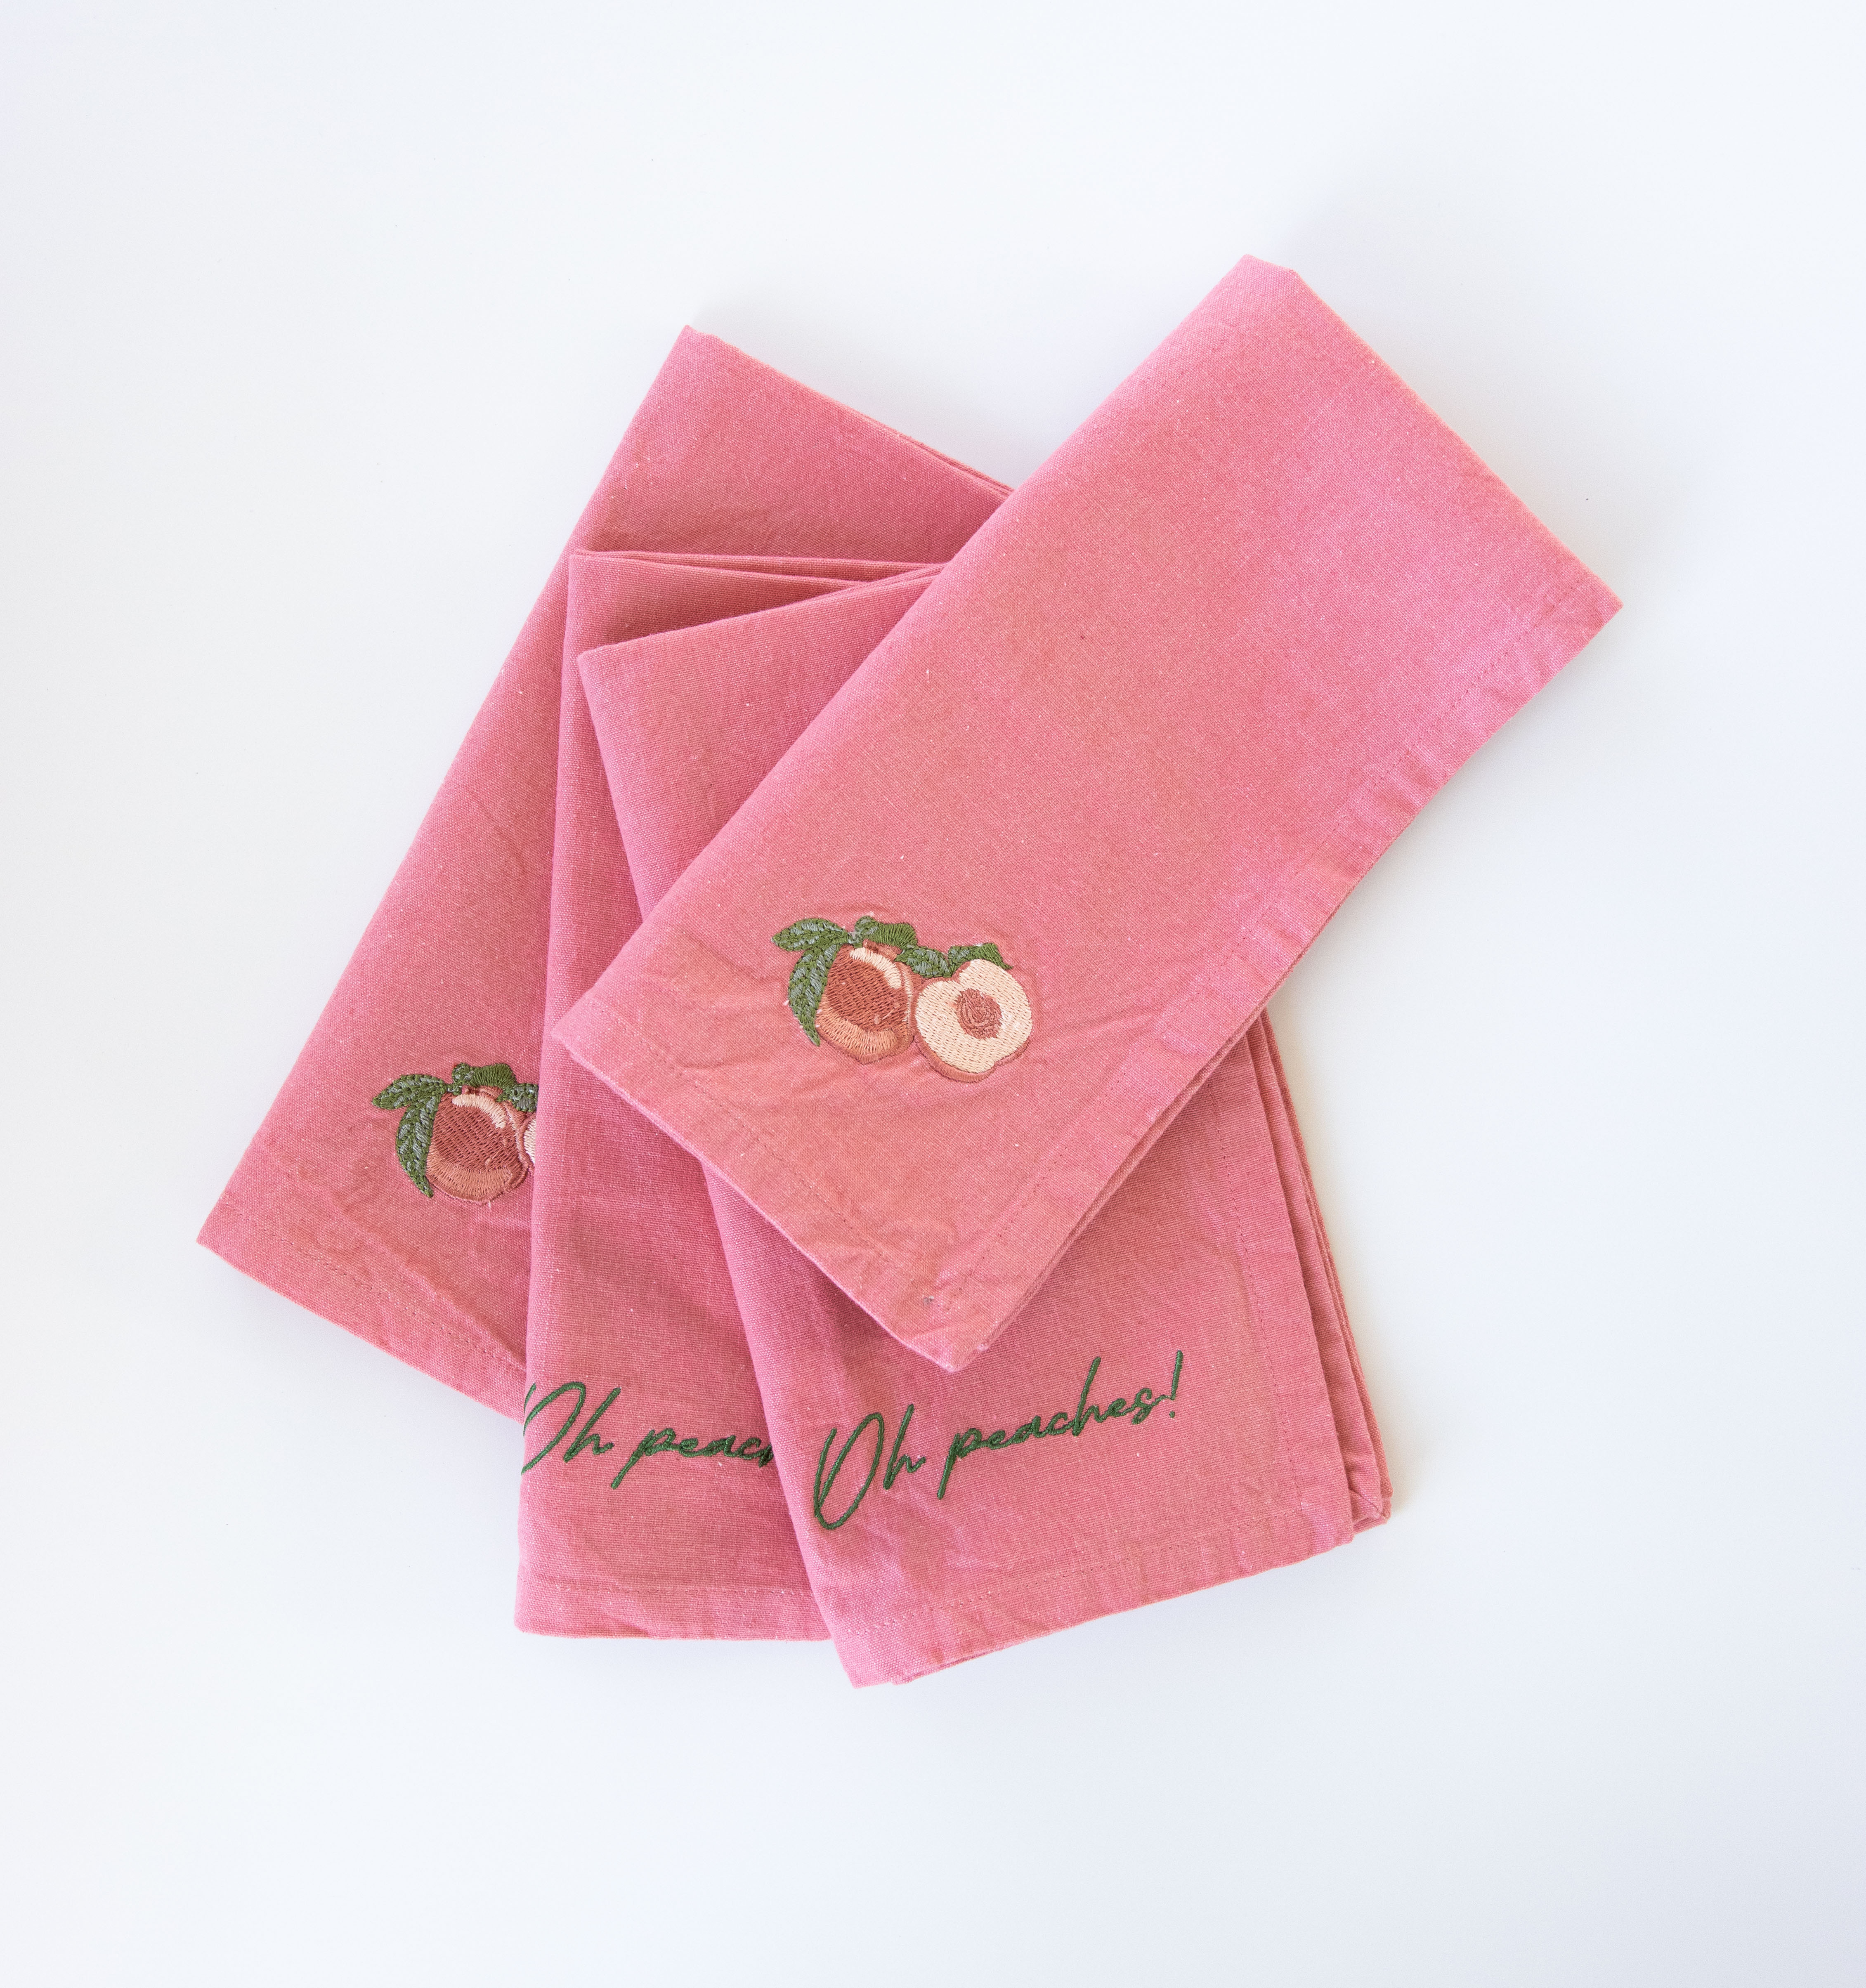 Oh Peaches! - Cloth napkin, set of 4